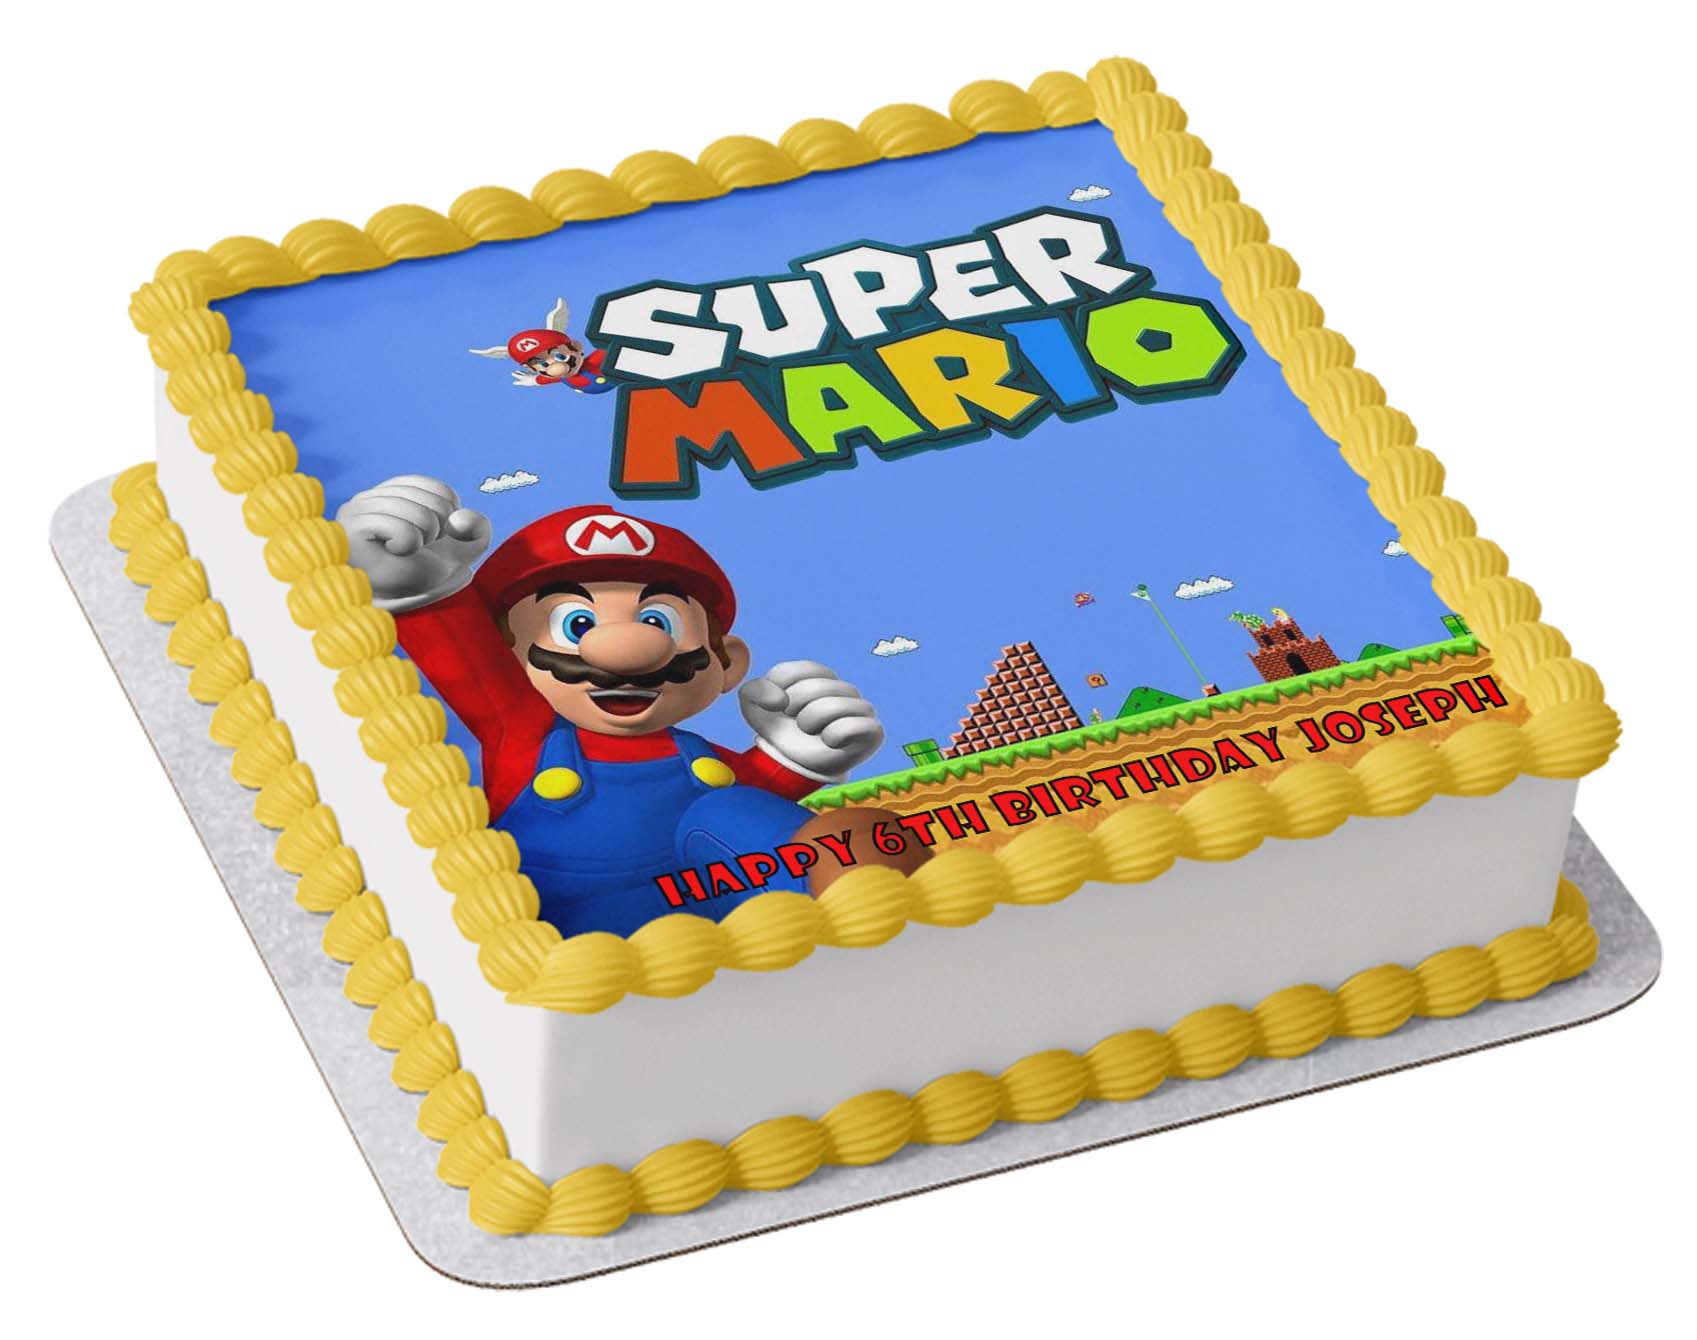 Mario Cake